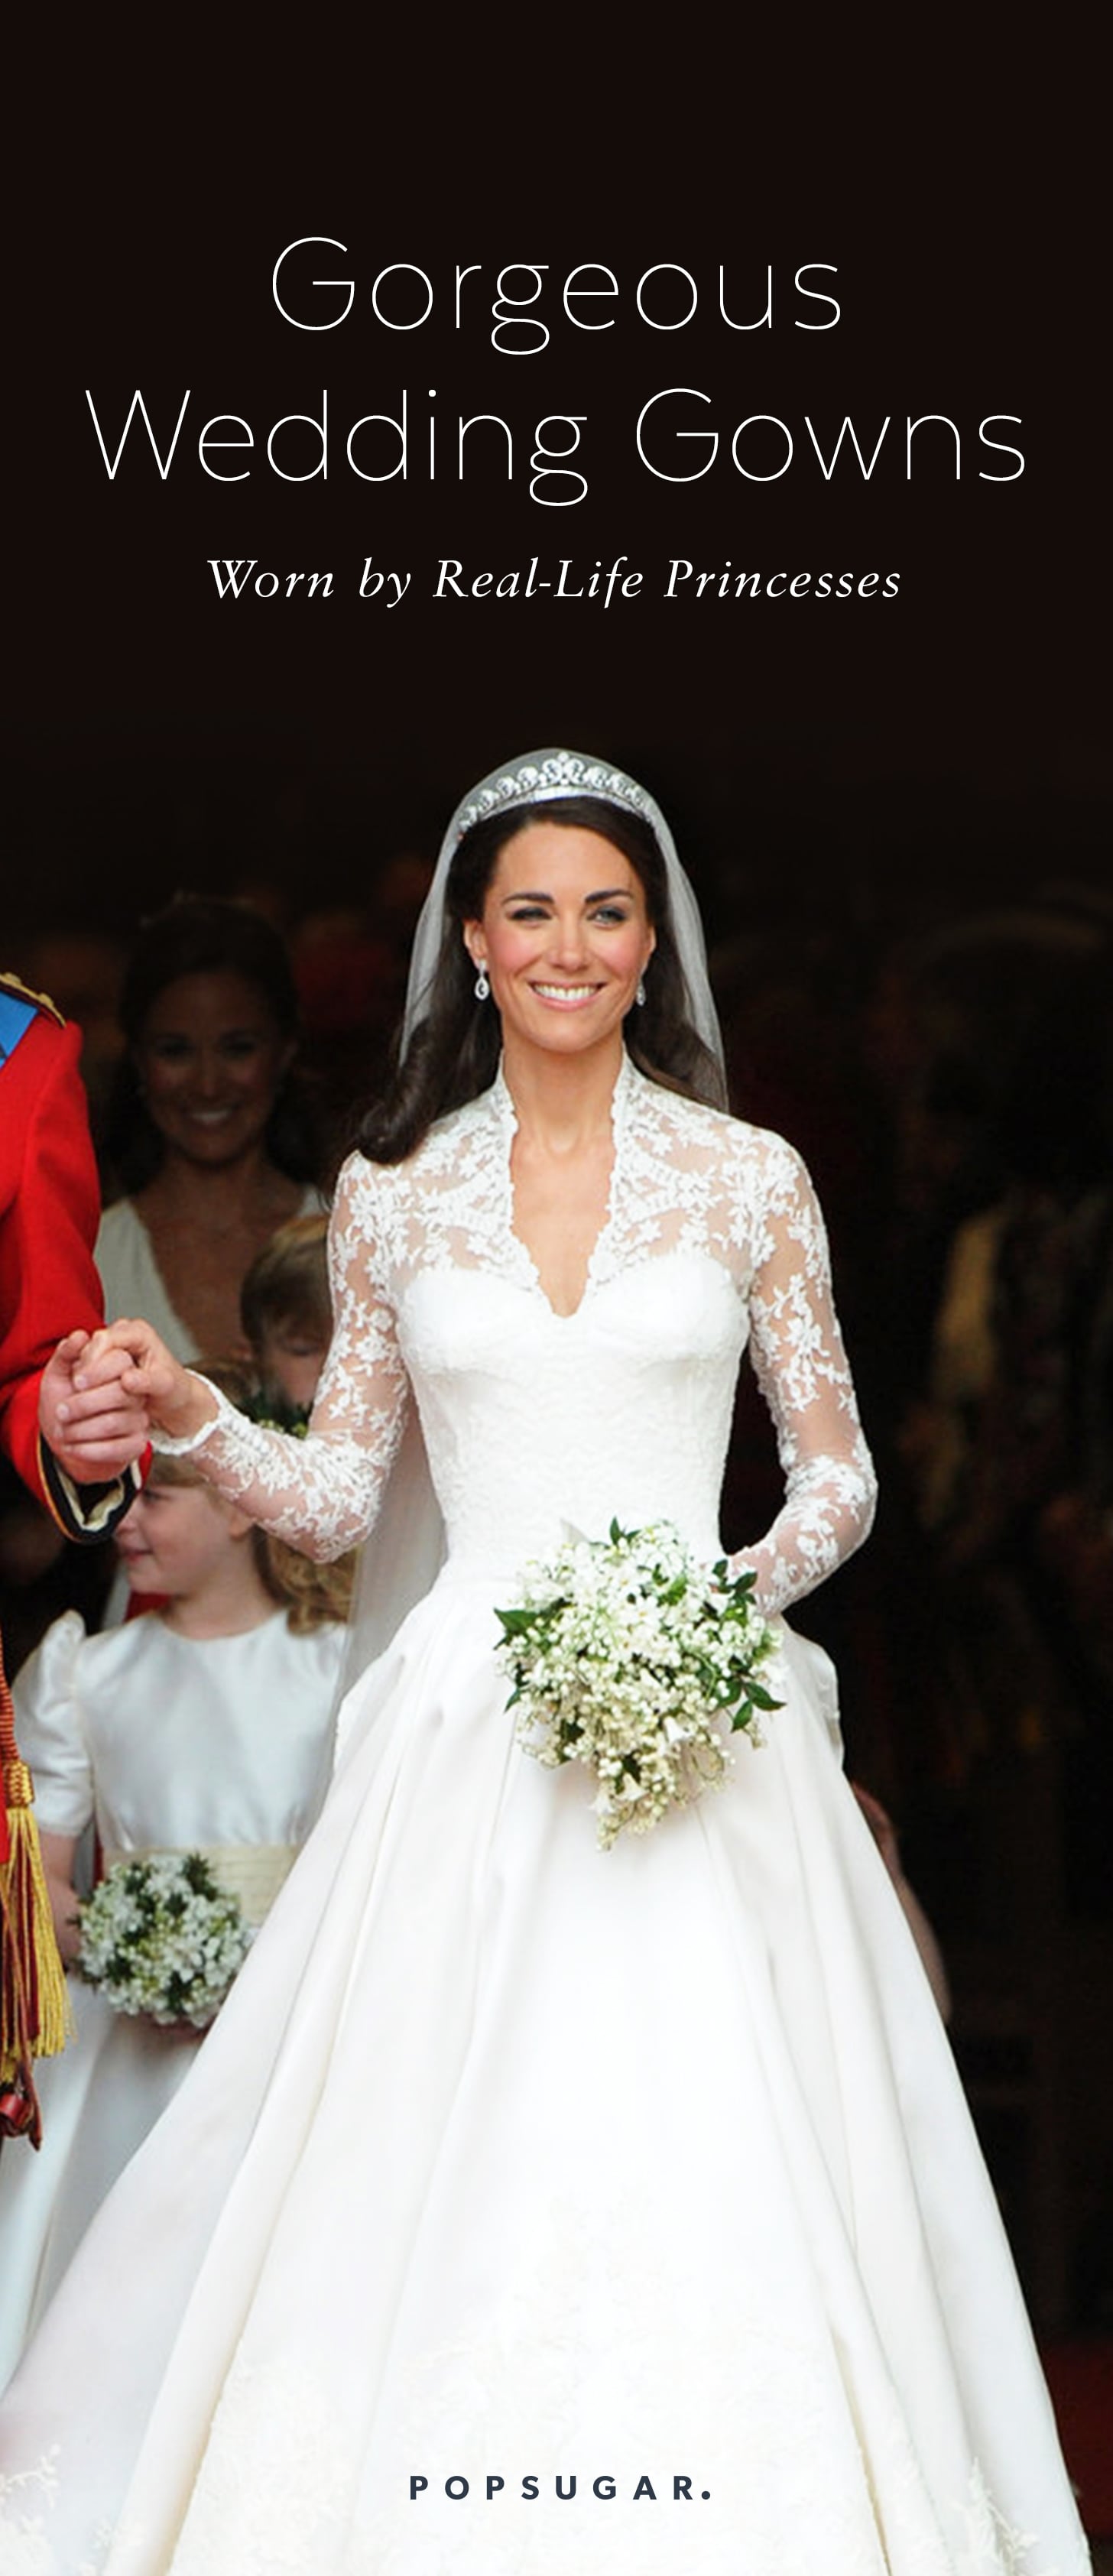 Wedding dresses worn by real-life princesses, royals